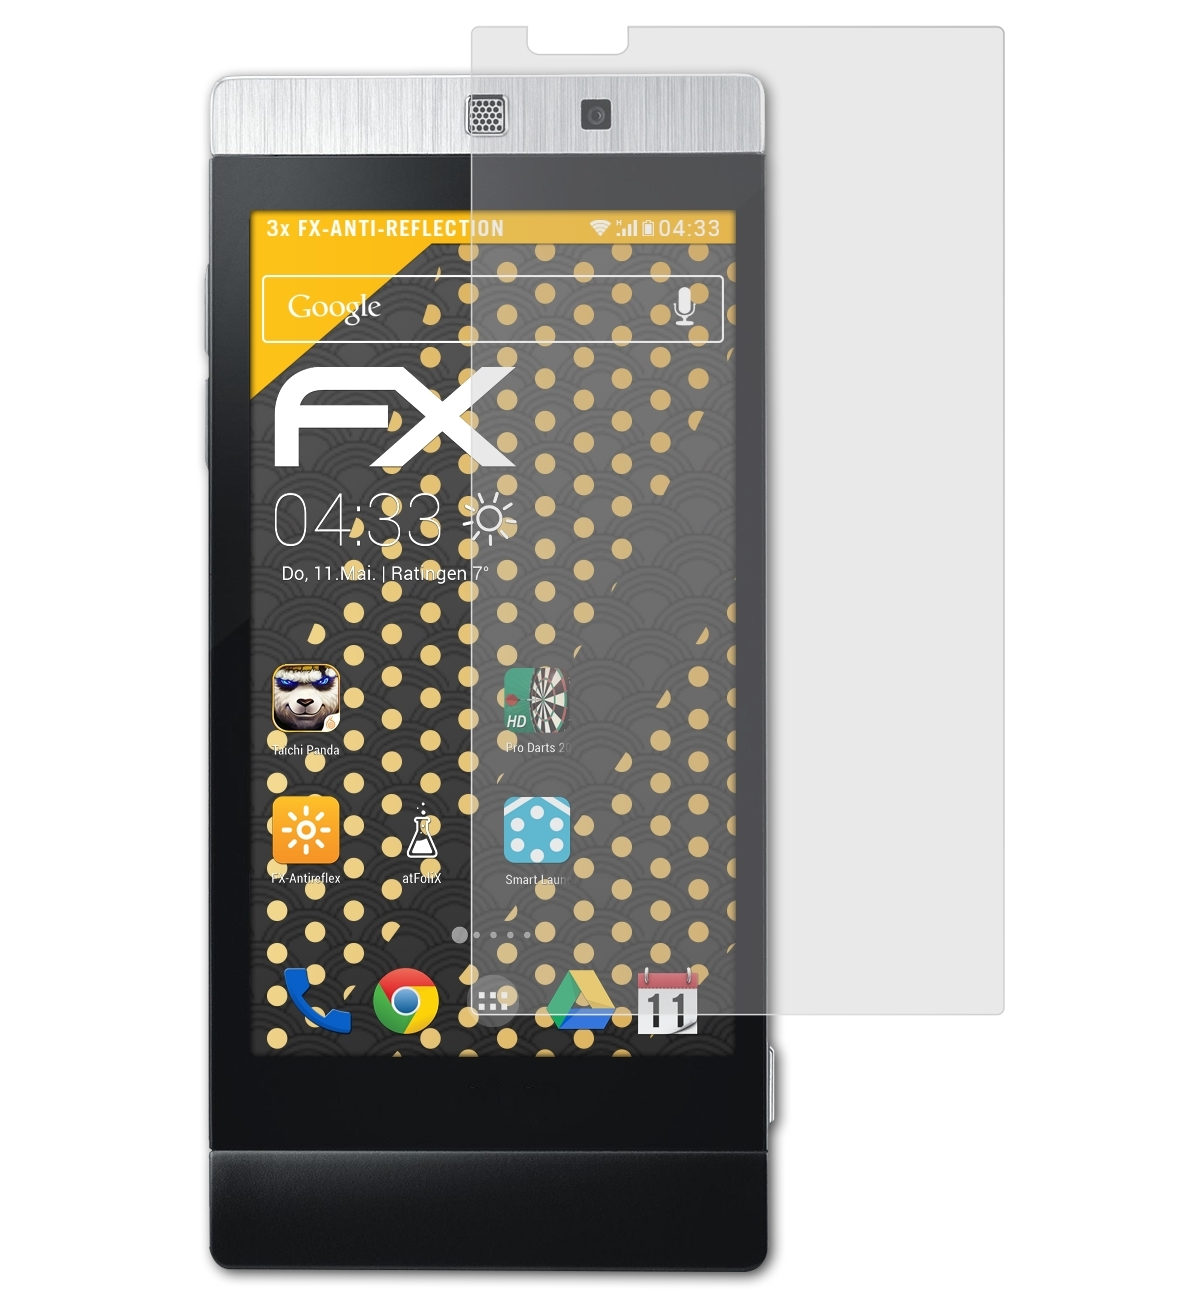 FX-Antireflex Displayschutz(für ATFOLIX Mini (GD880)) 3x LG